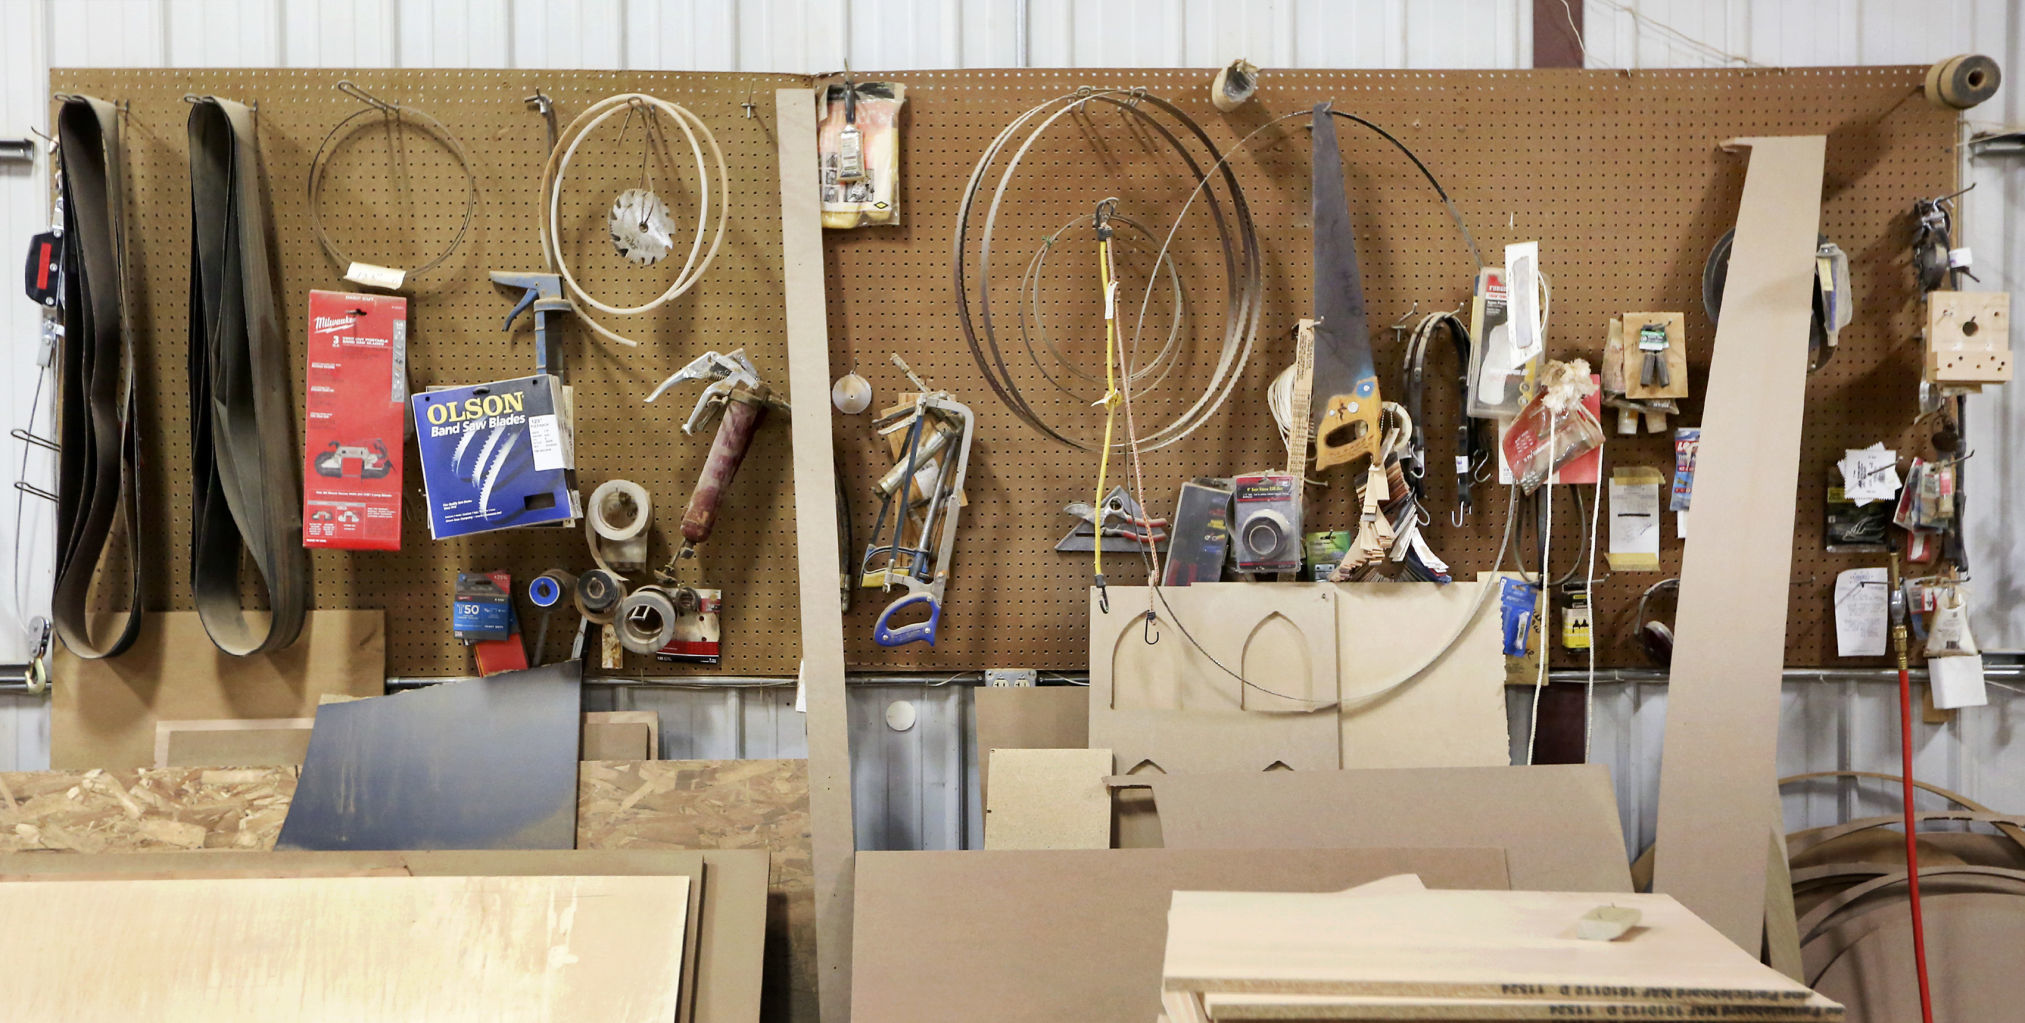 Tools at Heritage Wood Products in Worthington, Iowa, on Thursday, May 16, 2019.    PHOTO CREDIT: NICKI KOHL